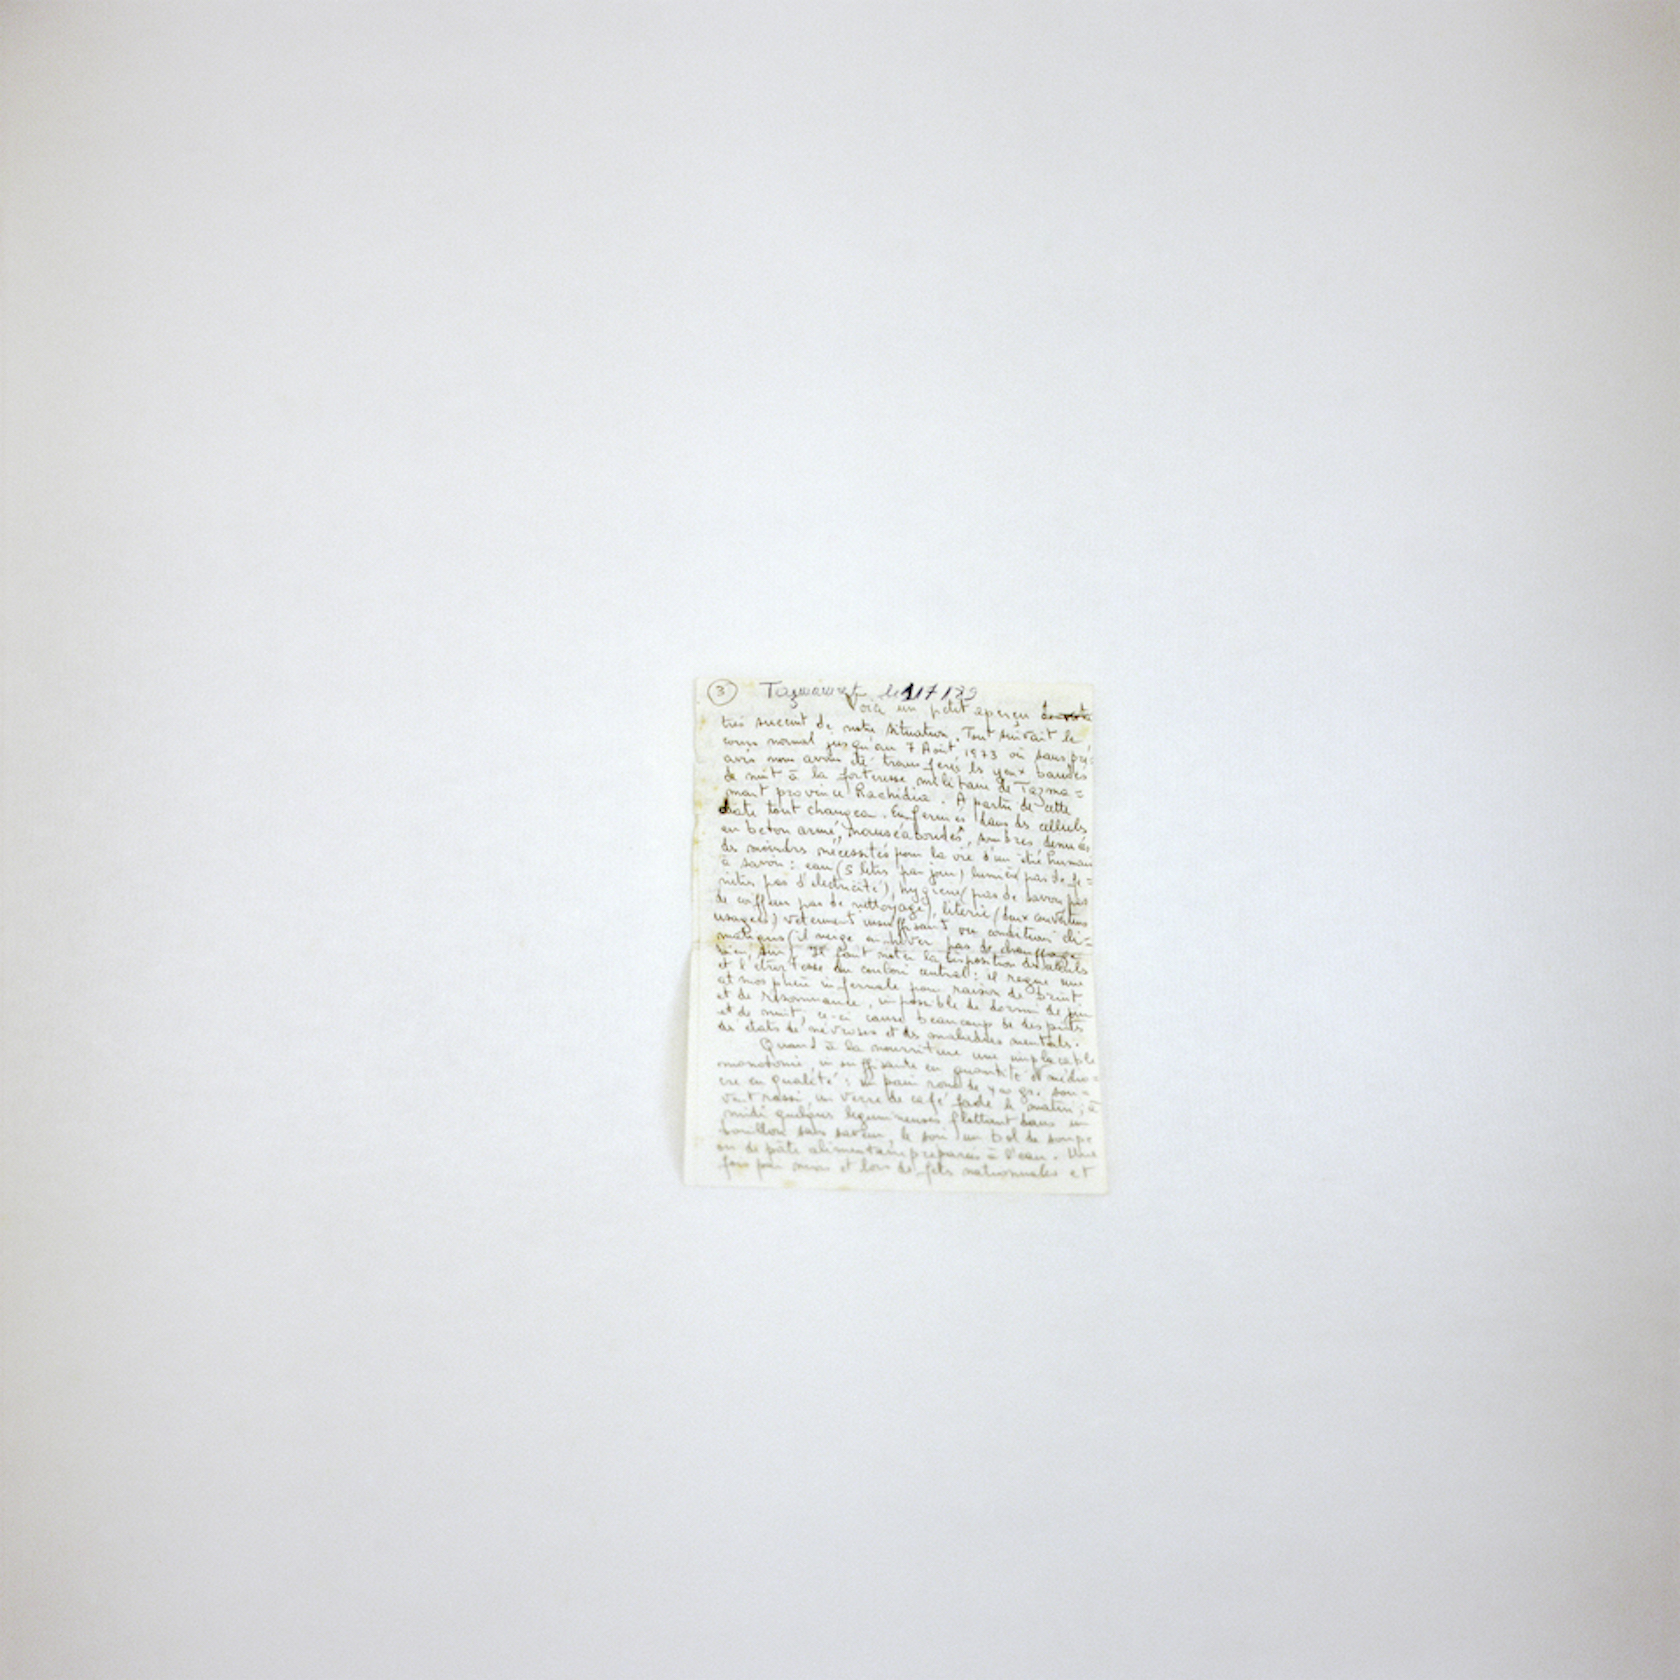 Objet de Tazmamart, Lettres, 2016, Inkjet print from analog photographs, 40 x 40 cm